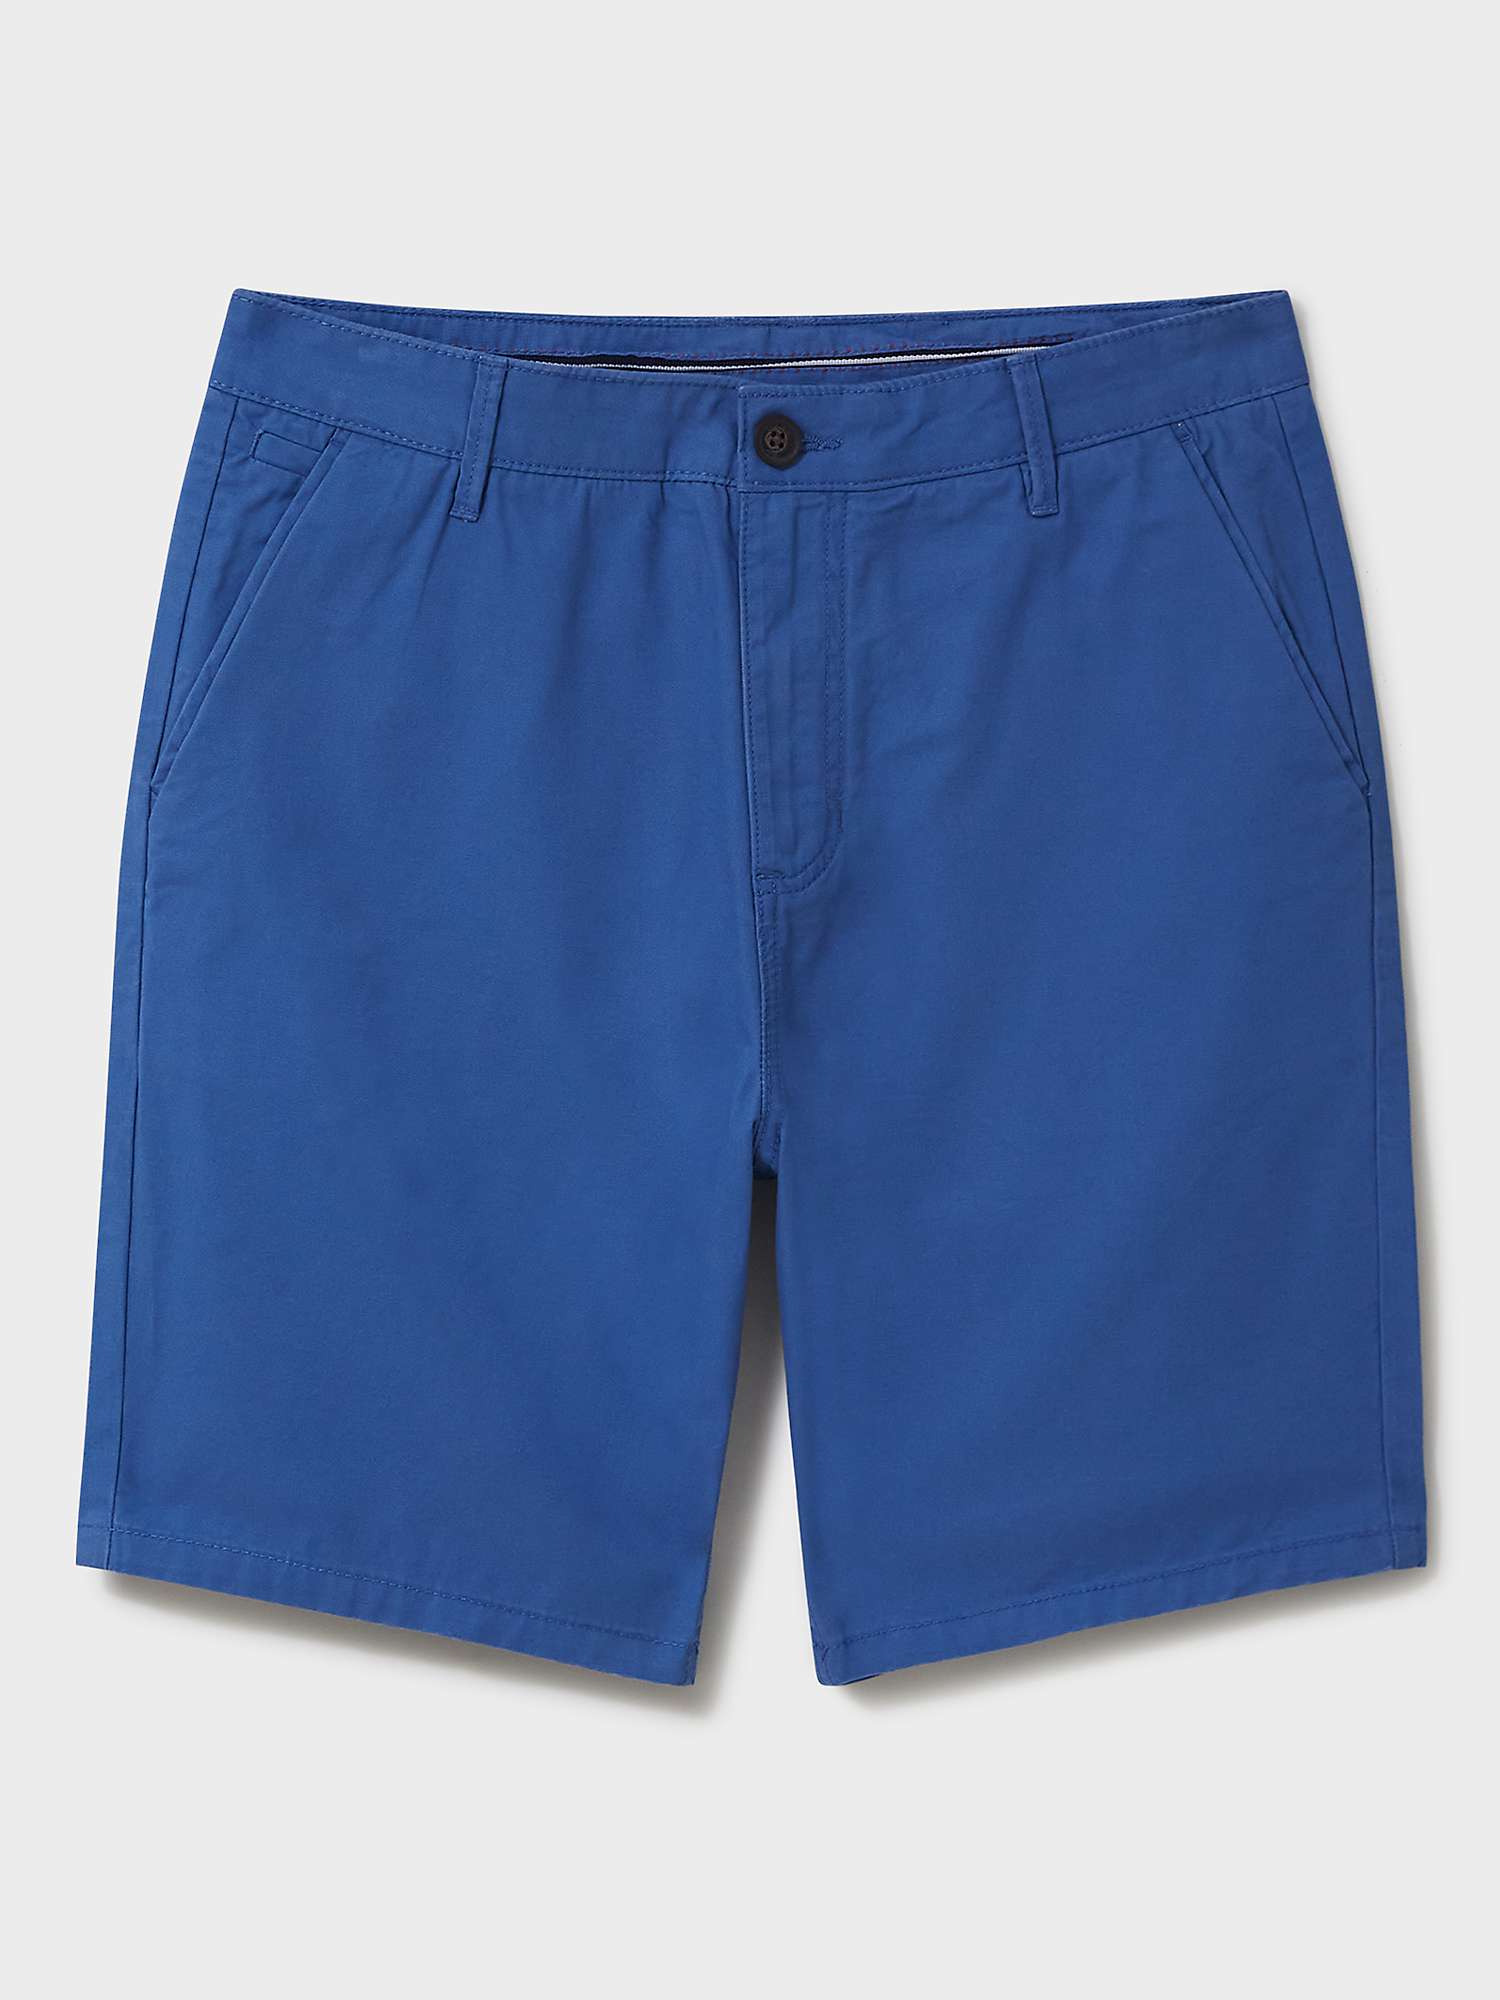 Buy Crew Clothing Bermuda Shorts Online at johnlewis.com